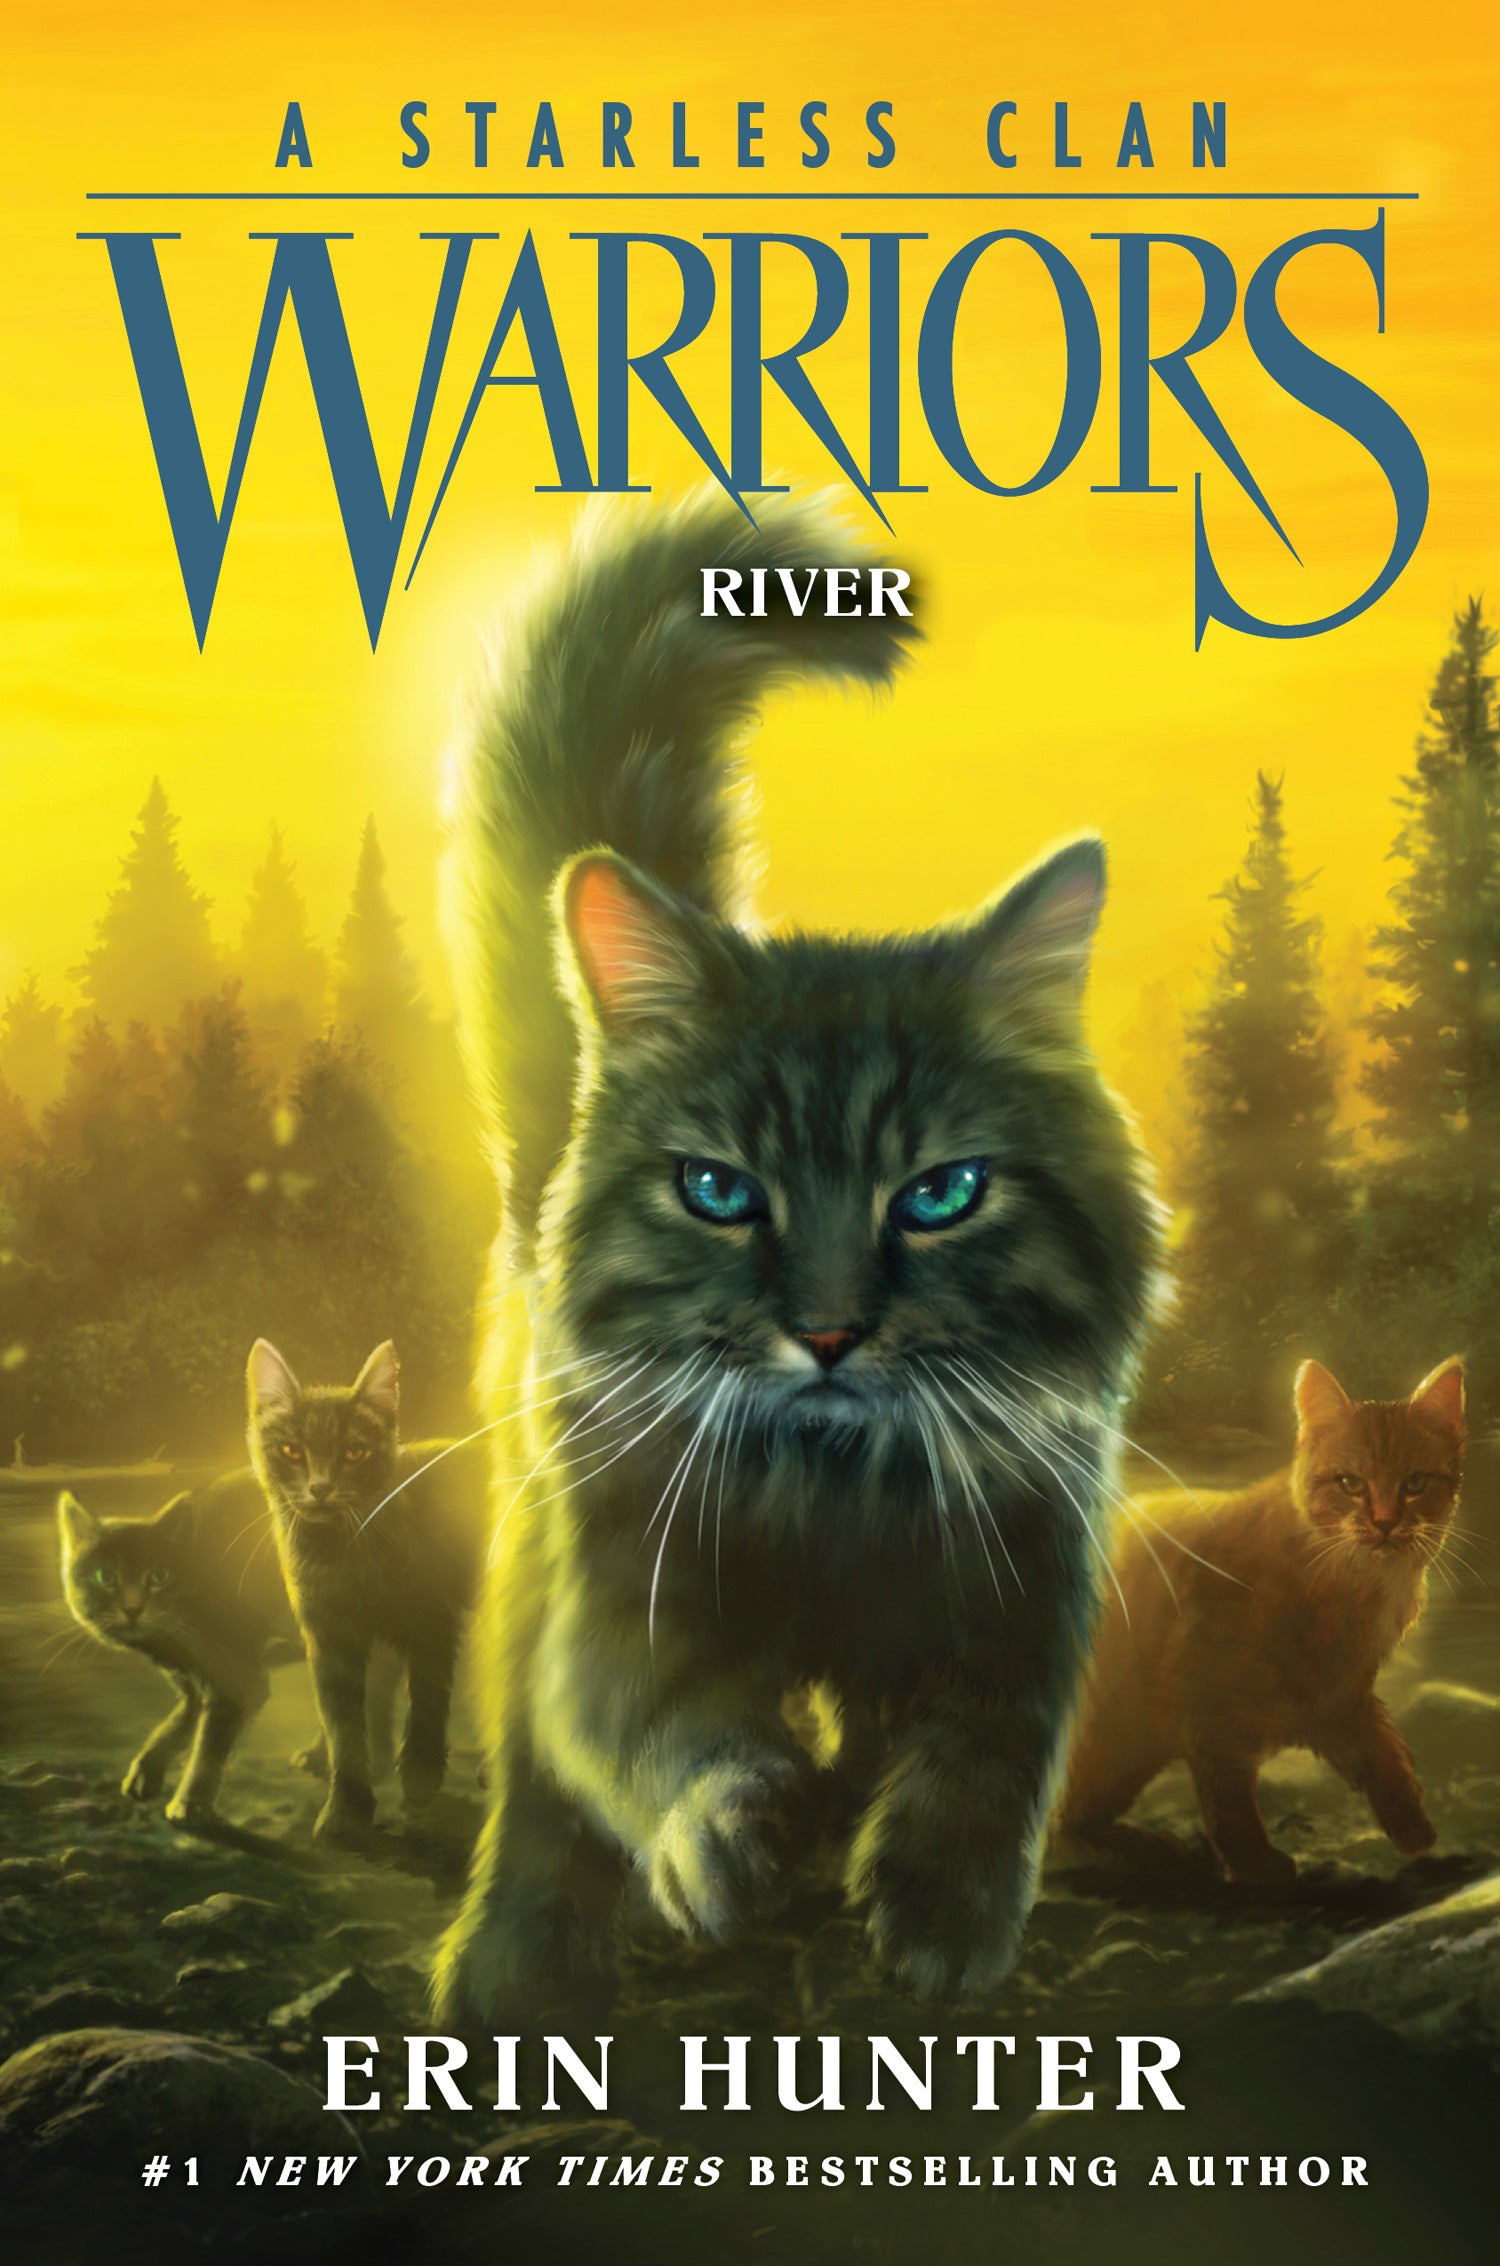 Warrior Cats Series 1: Books 1-6